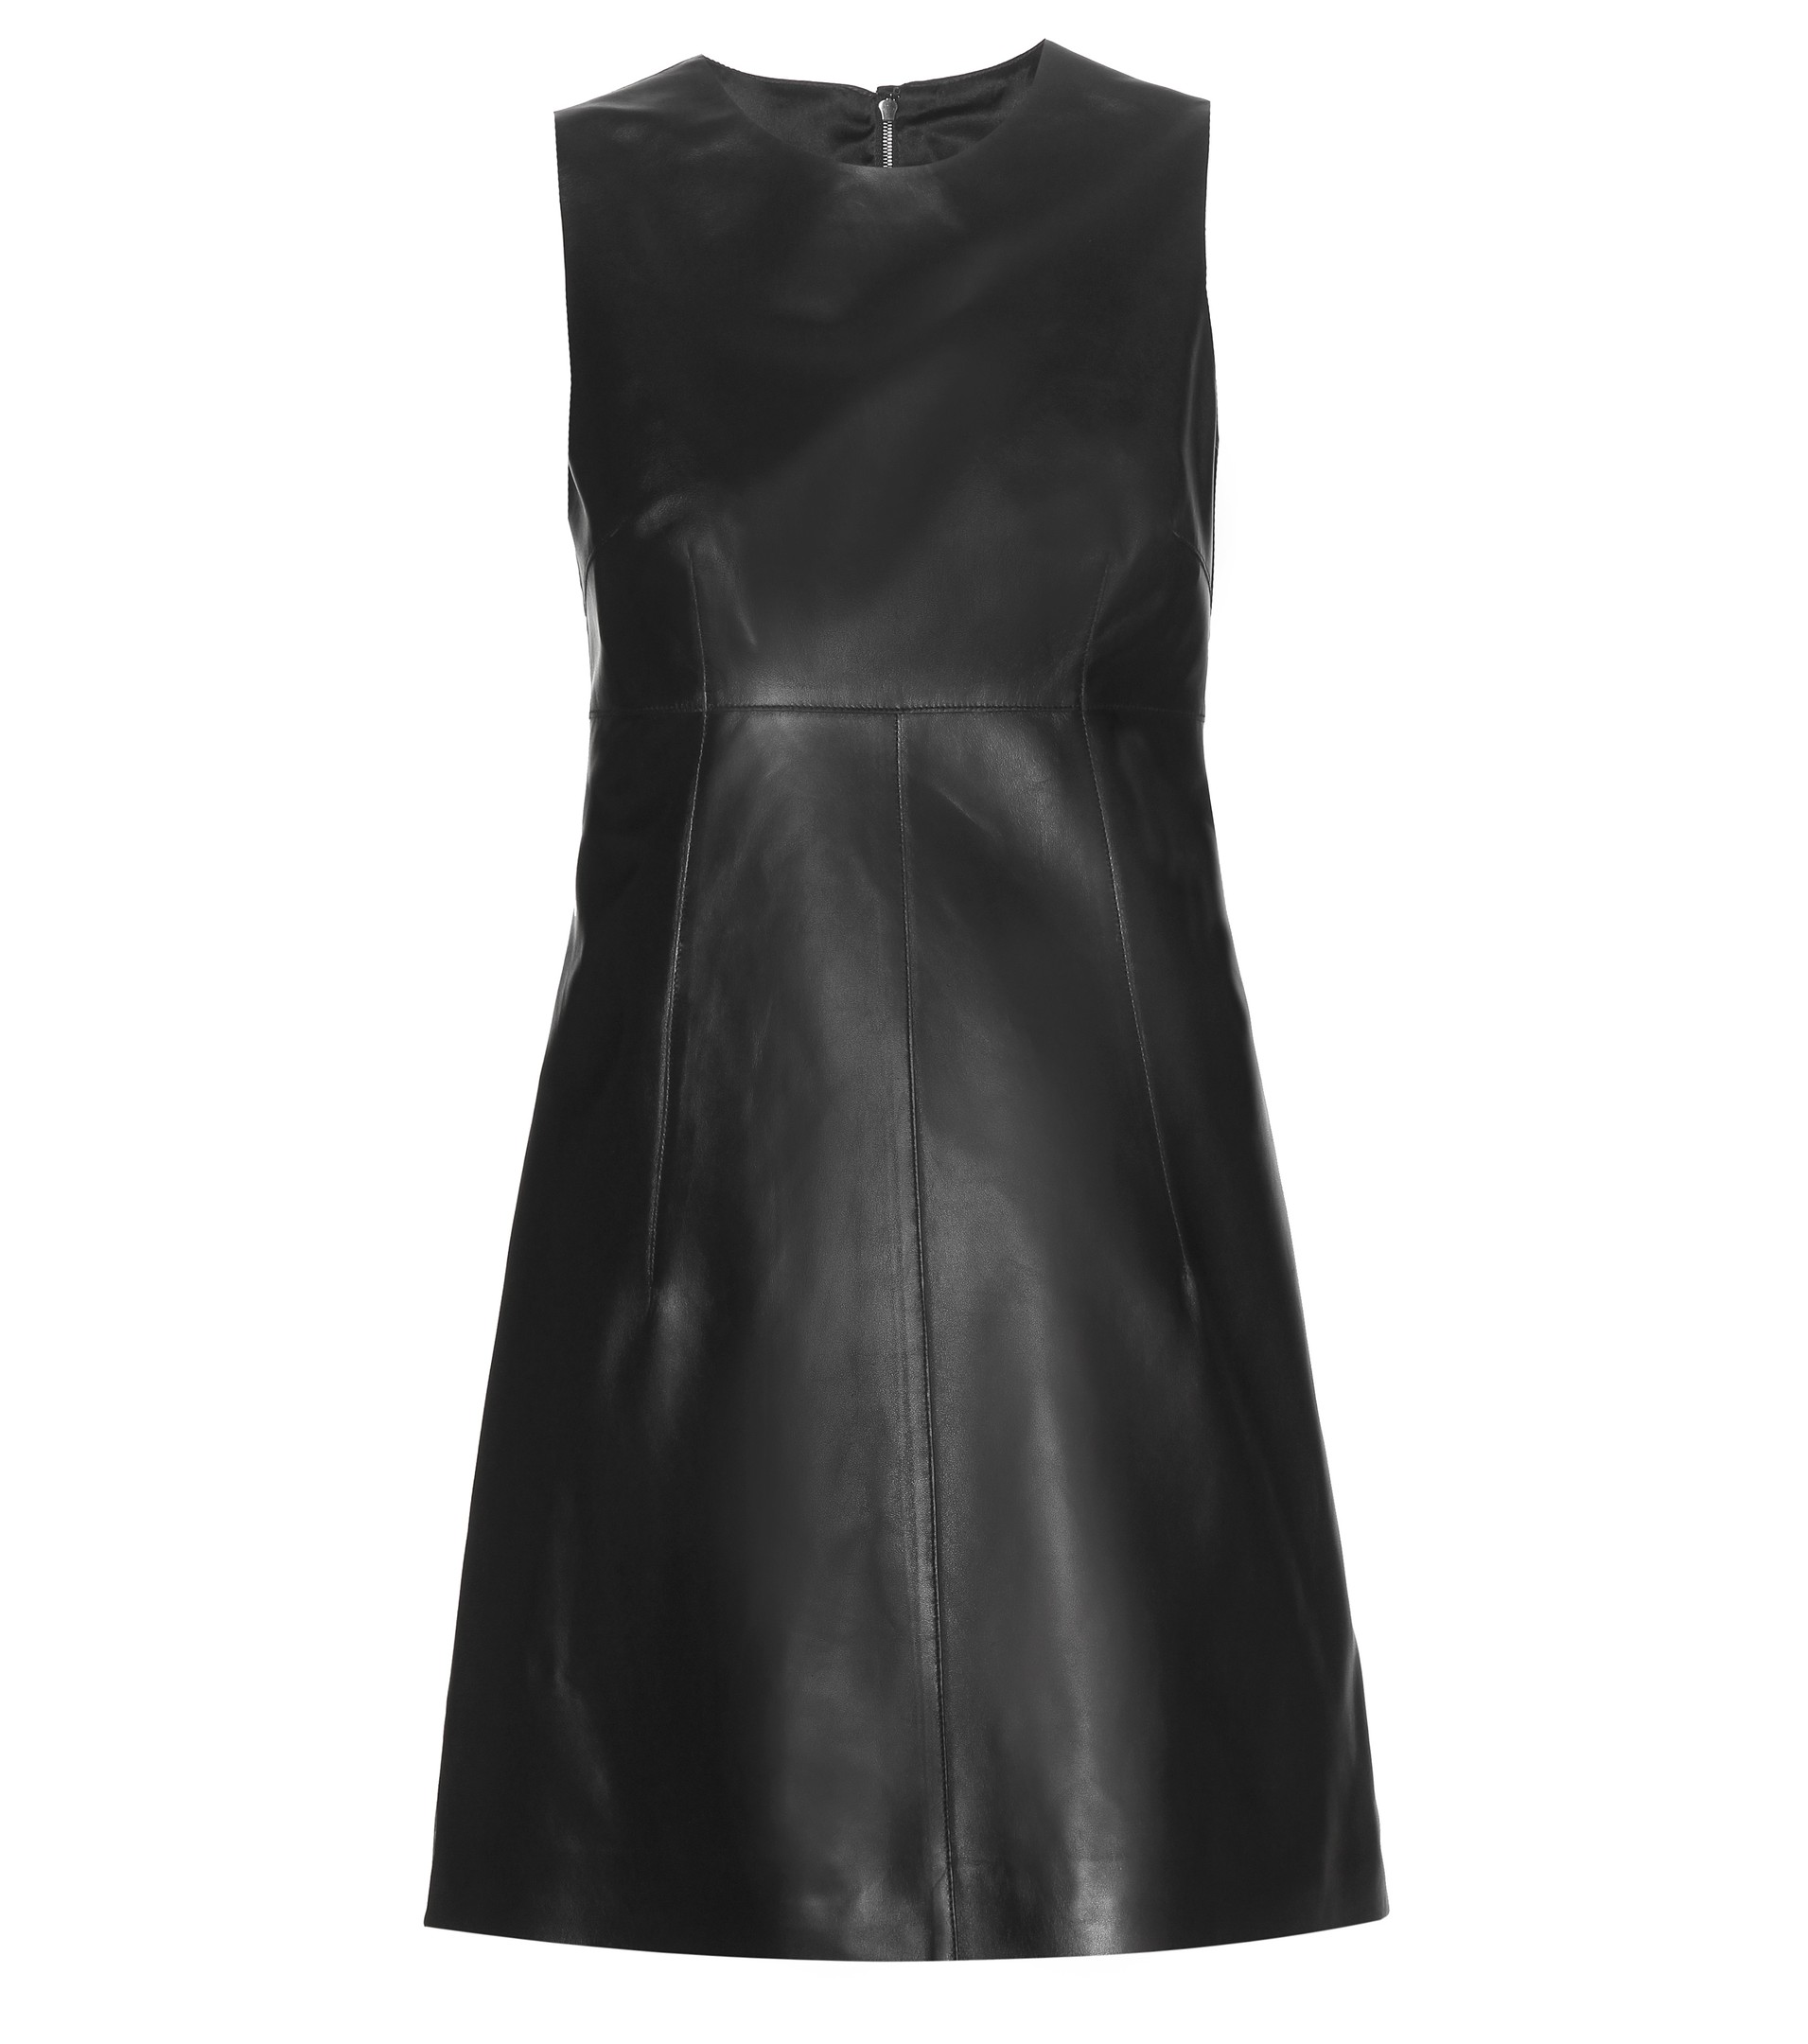 Dolce & Gabbana black sleeveless leather dress